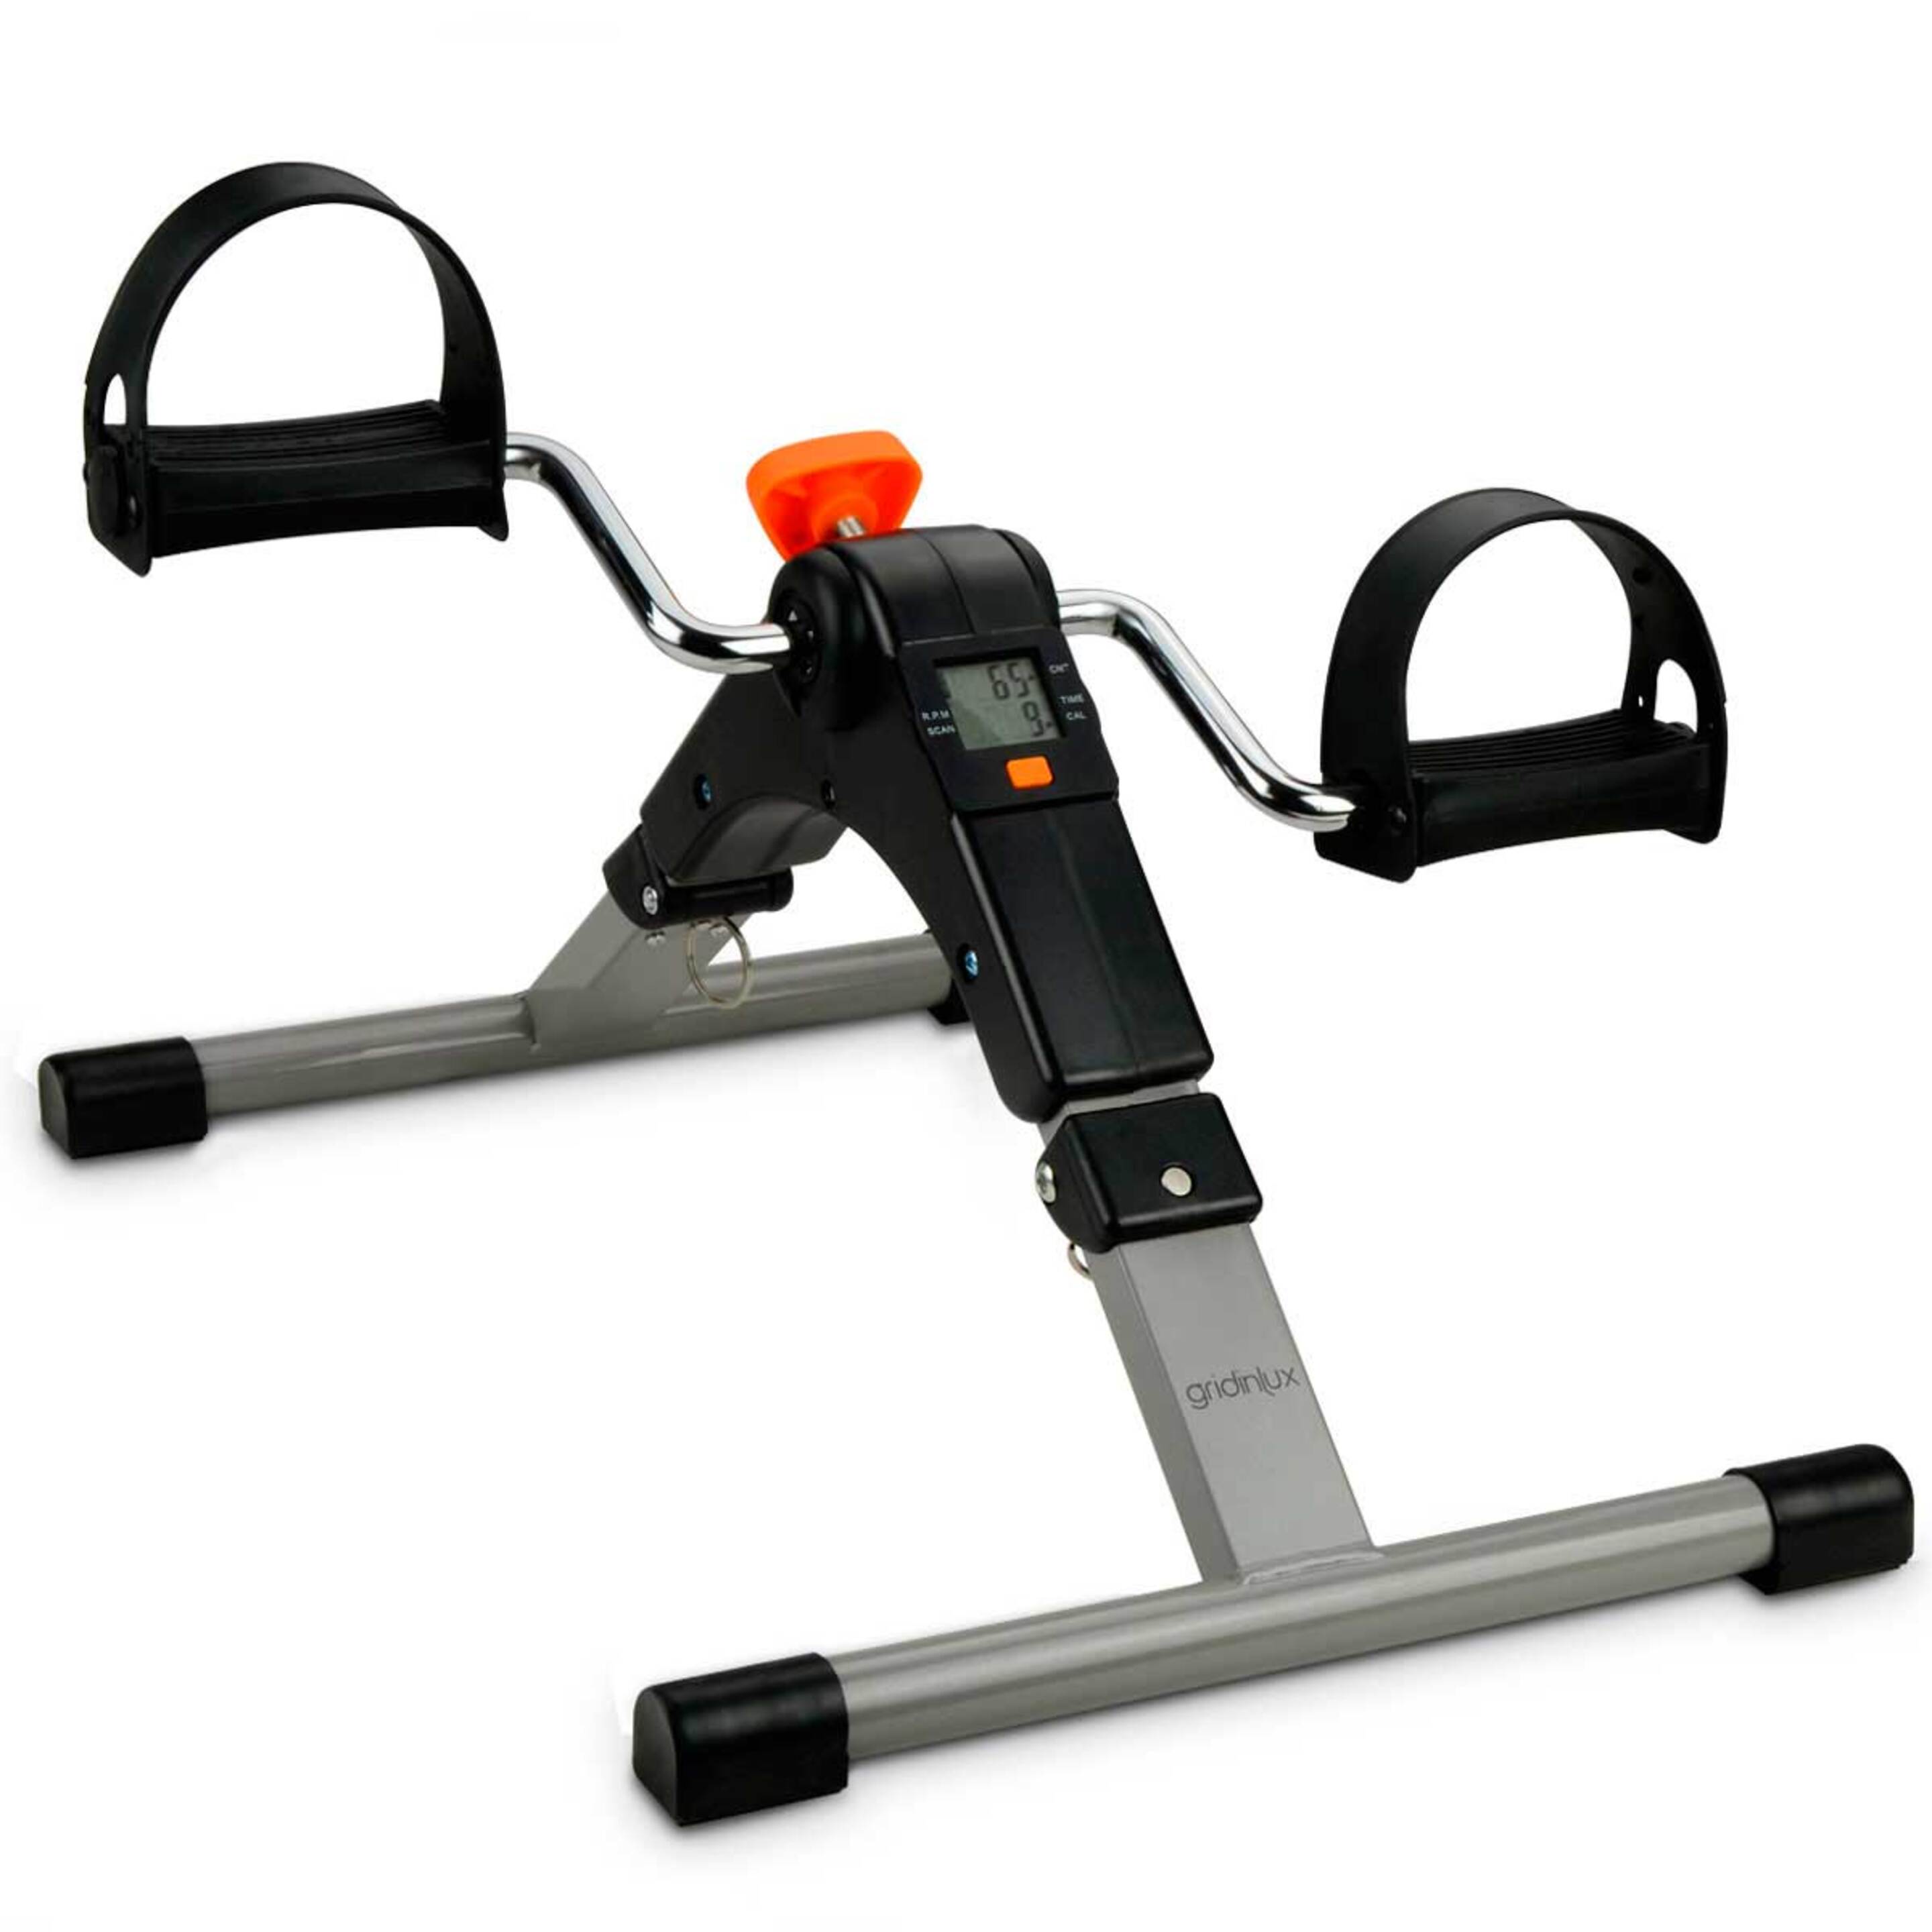 Small Fit 500 Exercitador Manual Pedal Pernas Ginástica Passiva. Gridinlux - negro - 